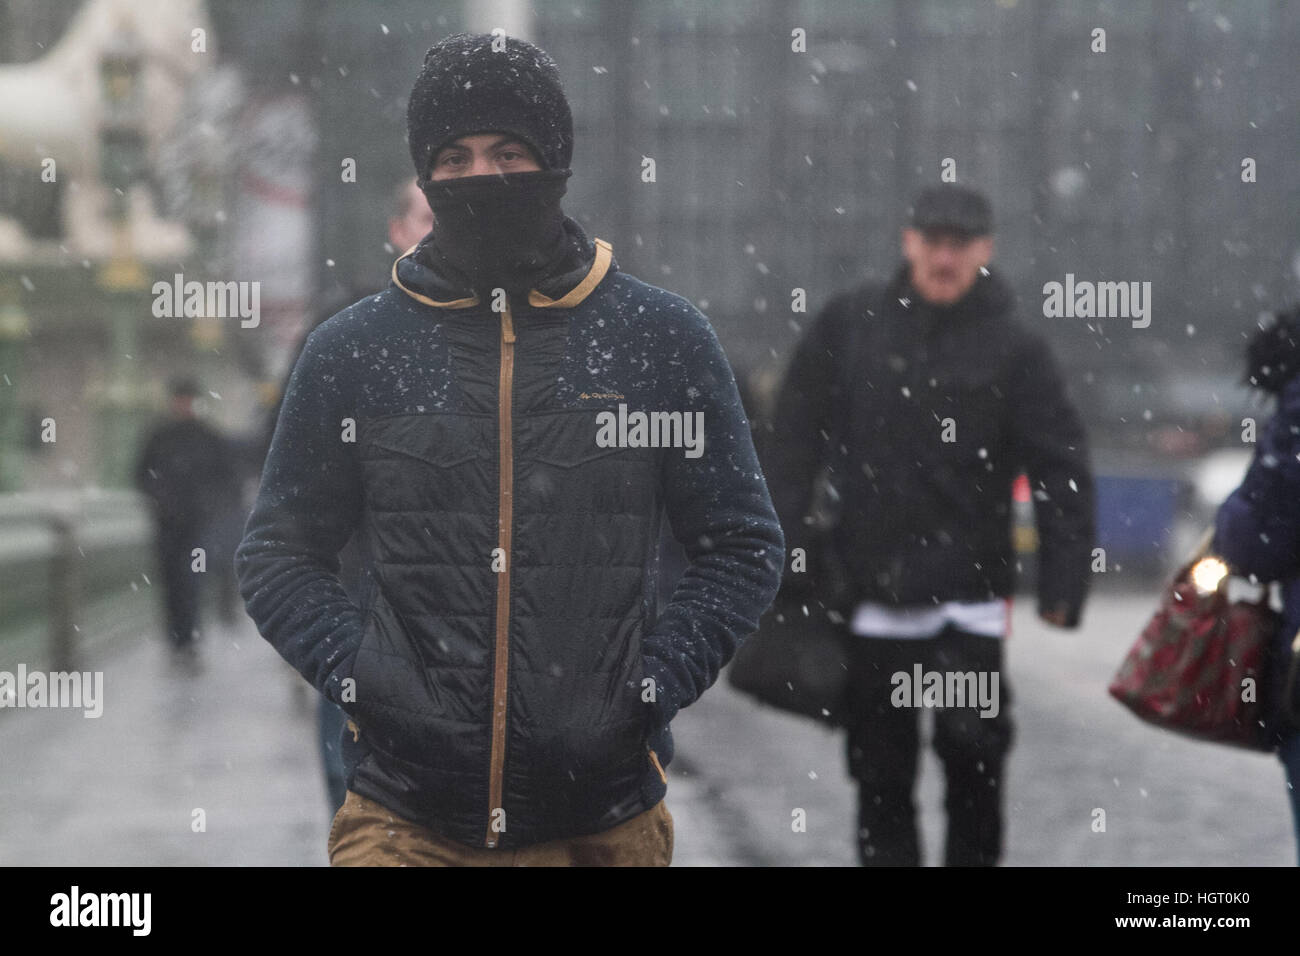 London, UK. 13th Jan, 2017. Pedestrians on Westminster bridge brave the snow and sleet © amer ghazzal/Alamy Live News Stock Photo